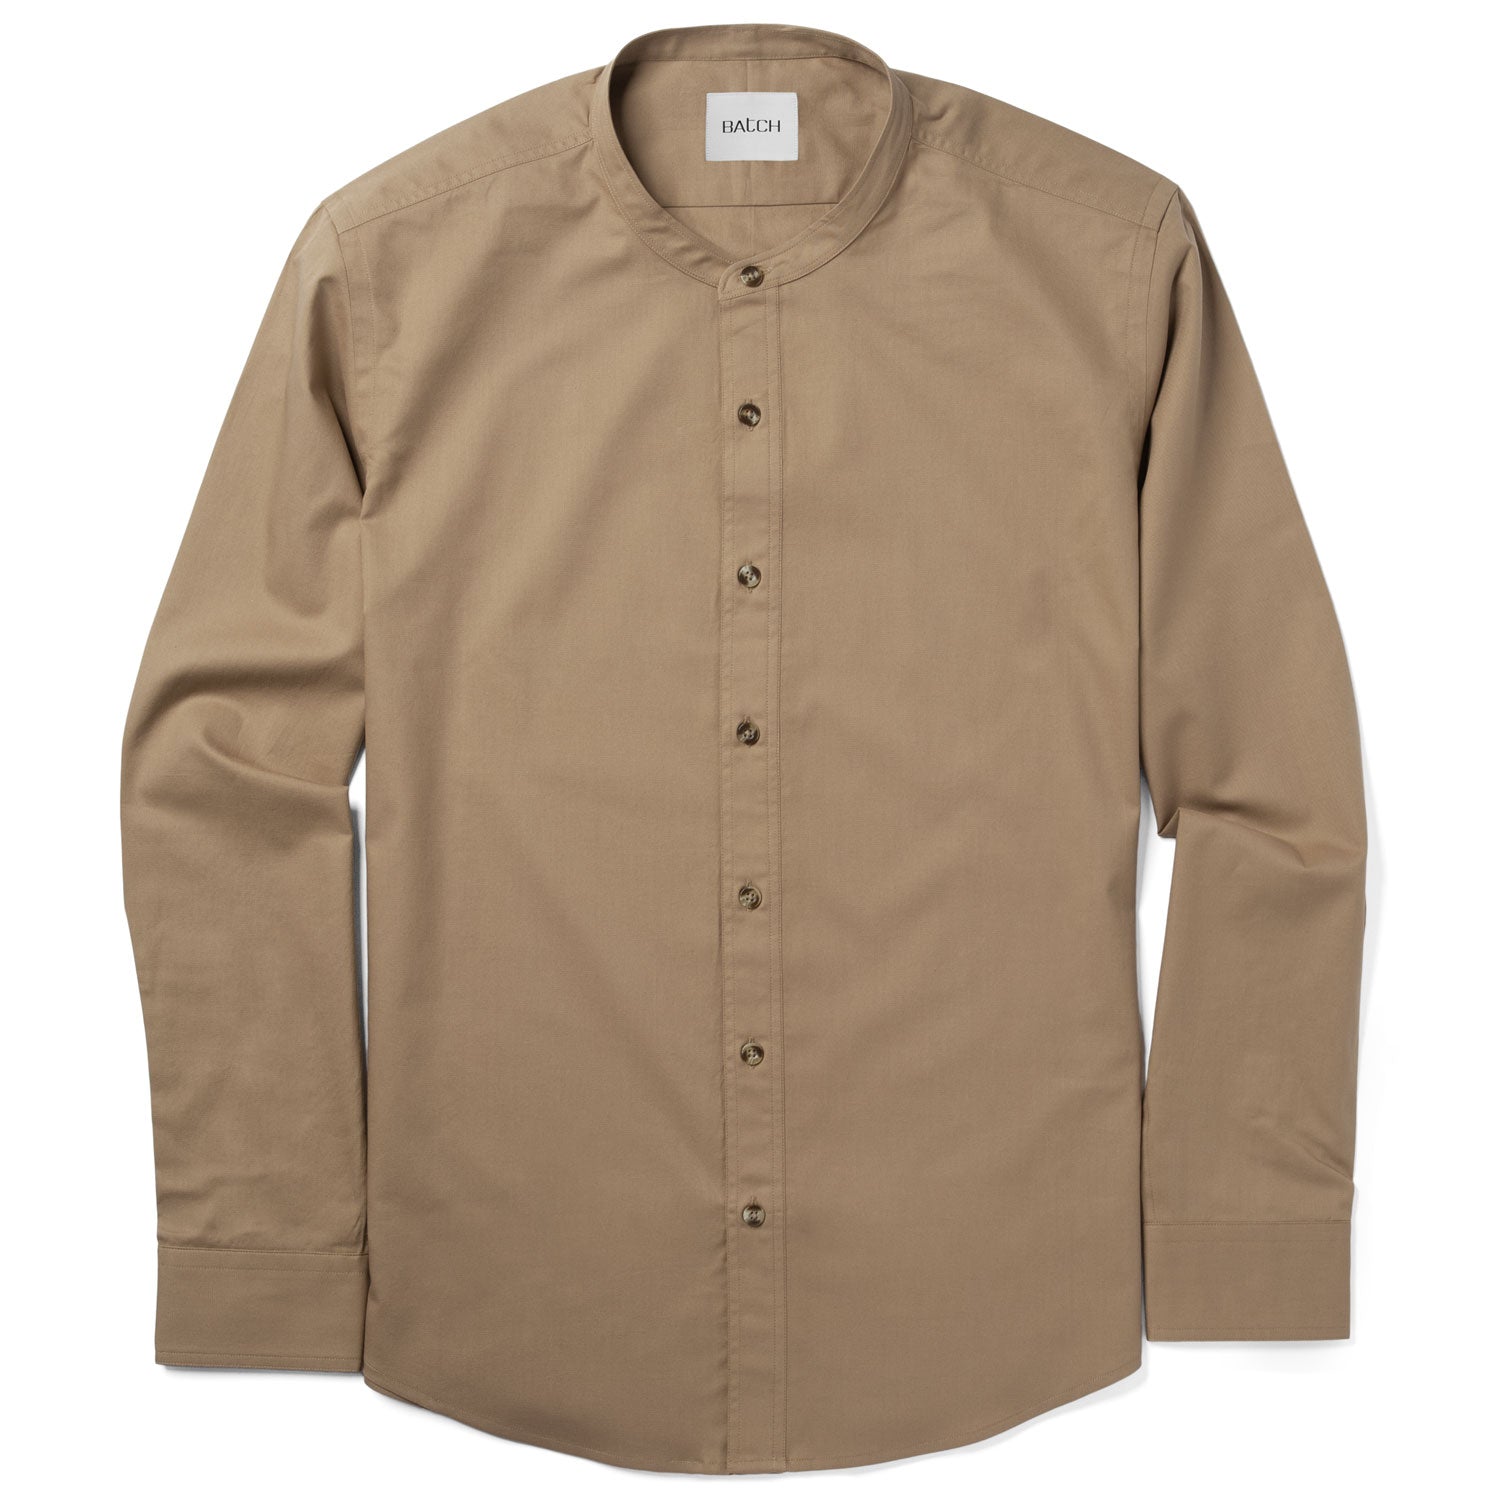 Essential Band Collar Button Down Shirt - Desert Stone Cotton Twill